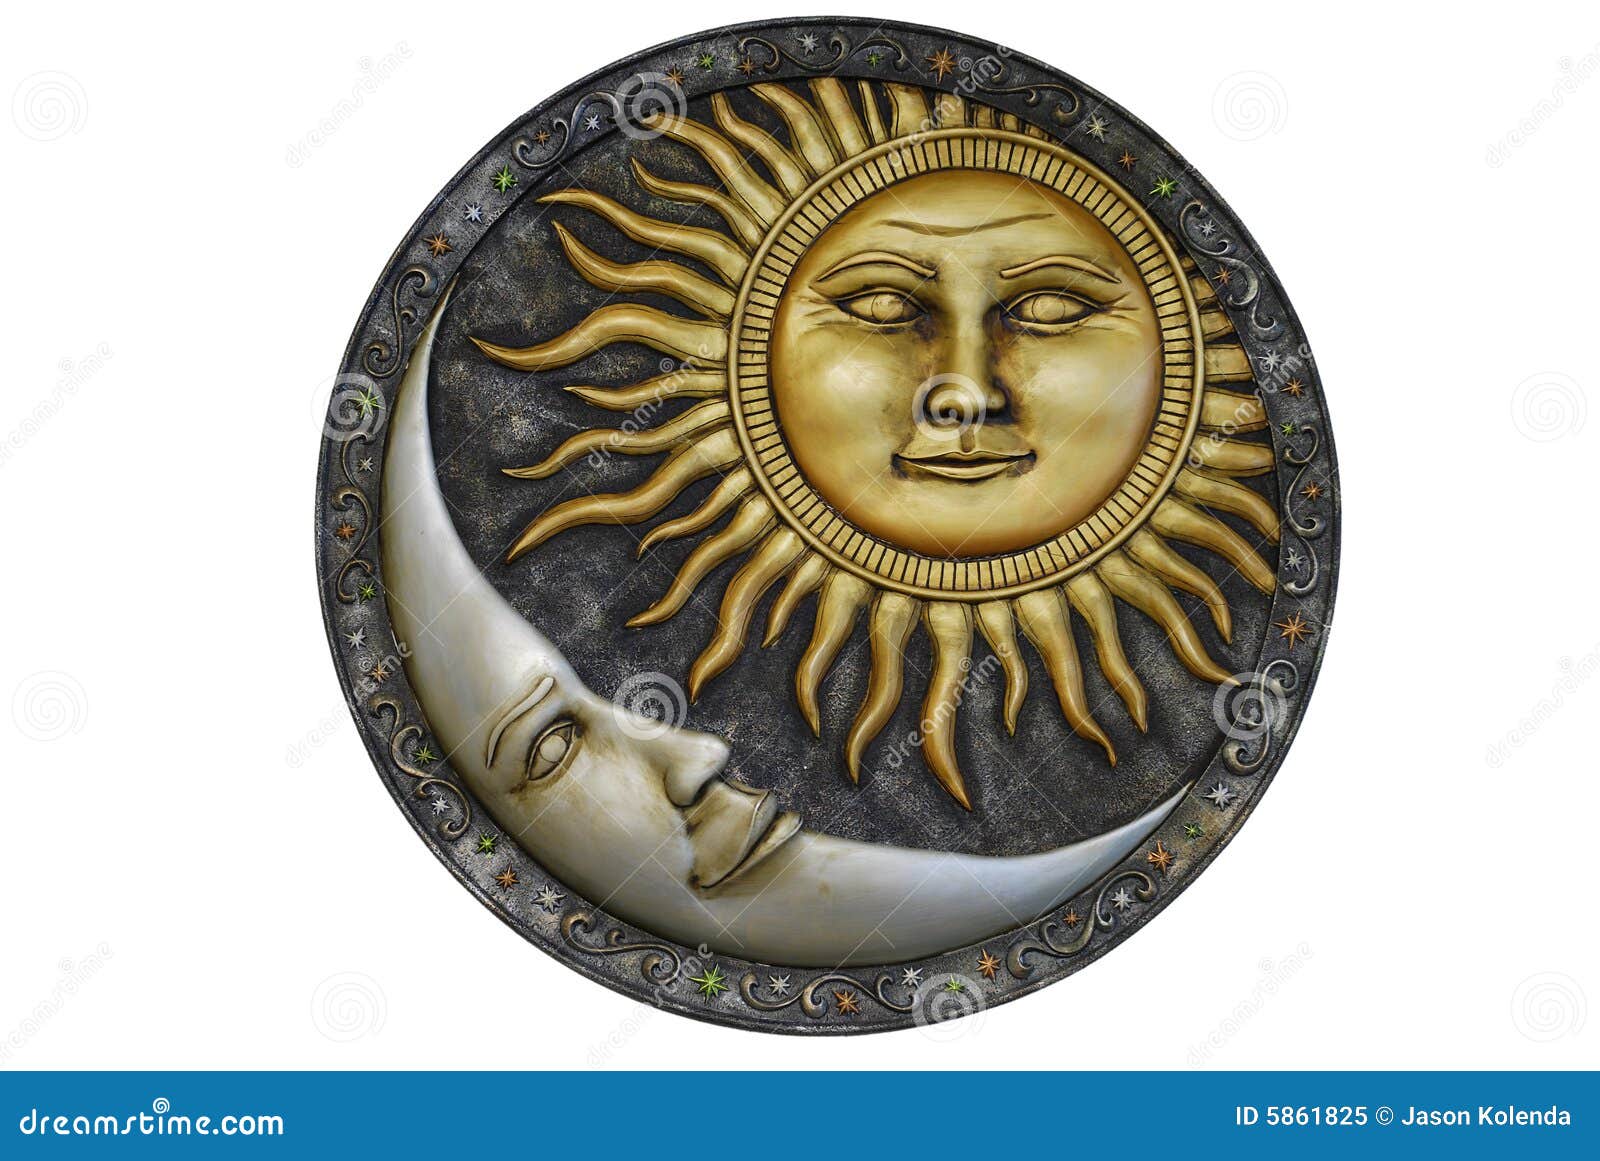 sun and moon - 